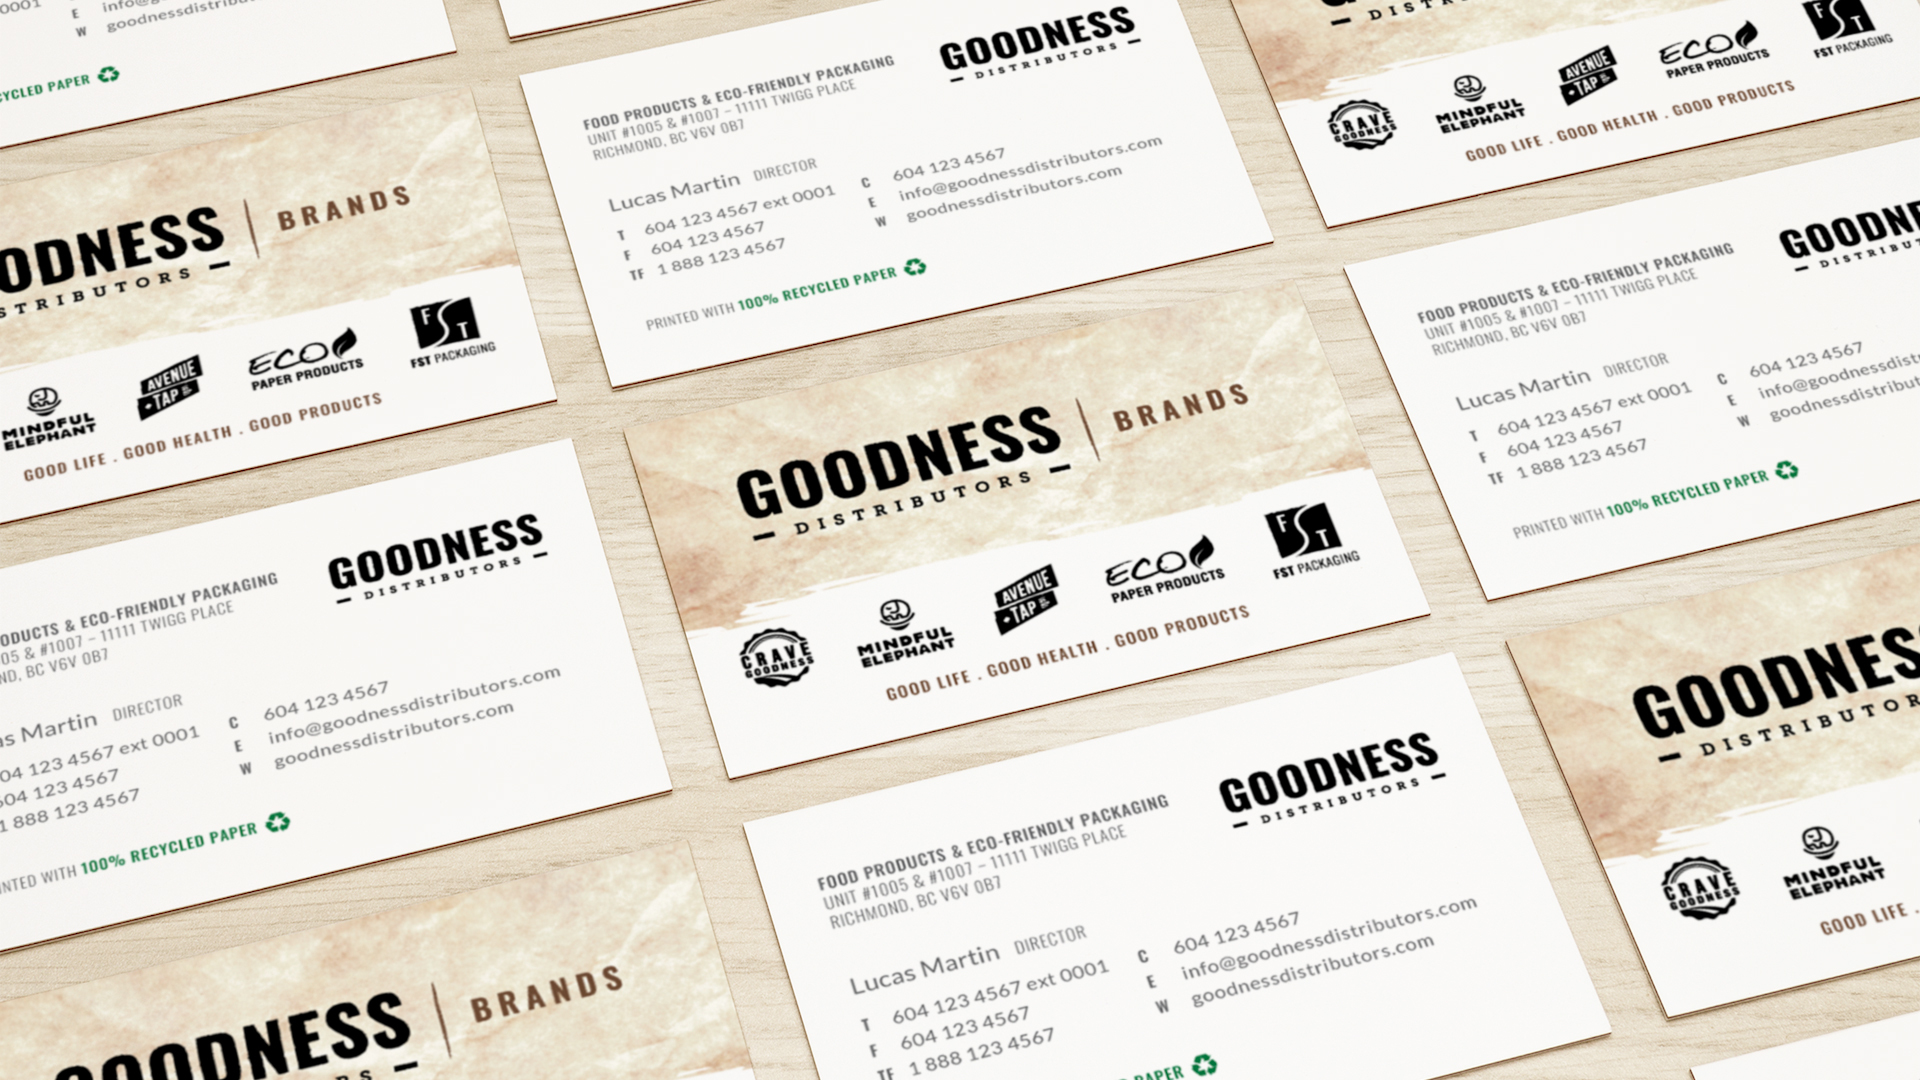 Goodness Distributors – Brand and Digital Strategies